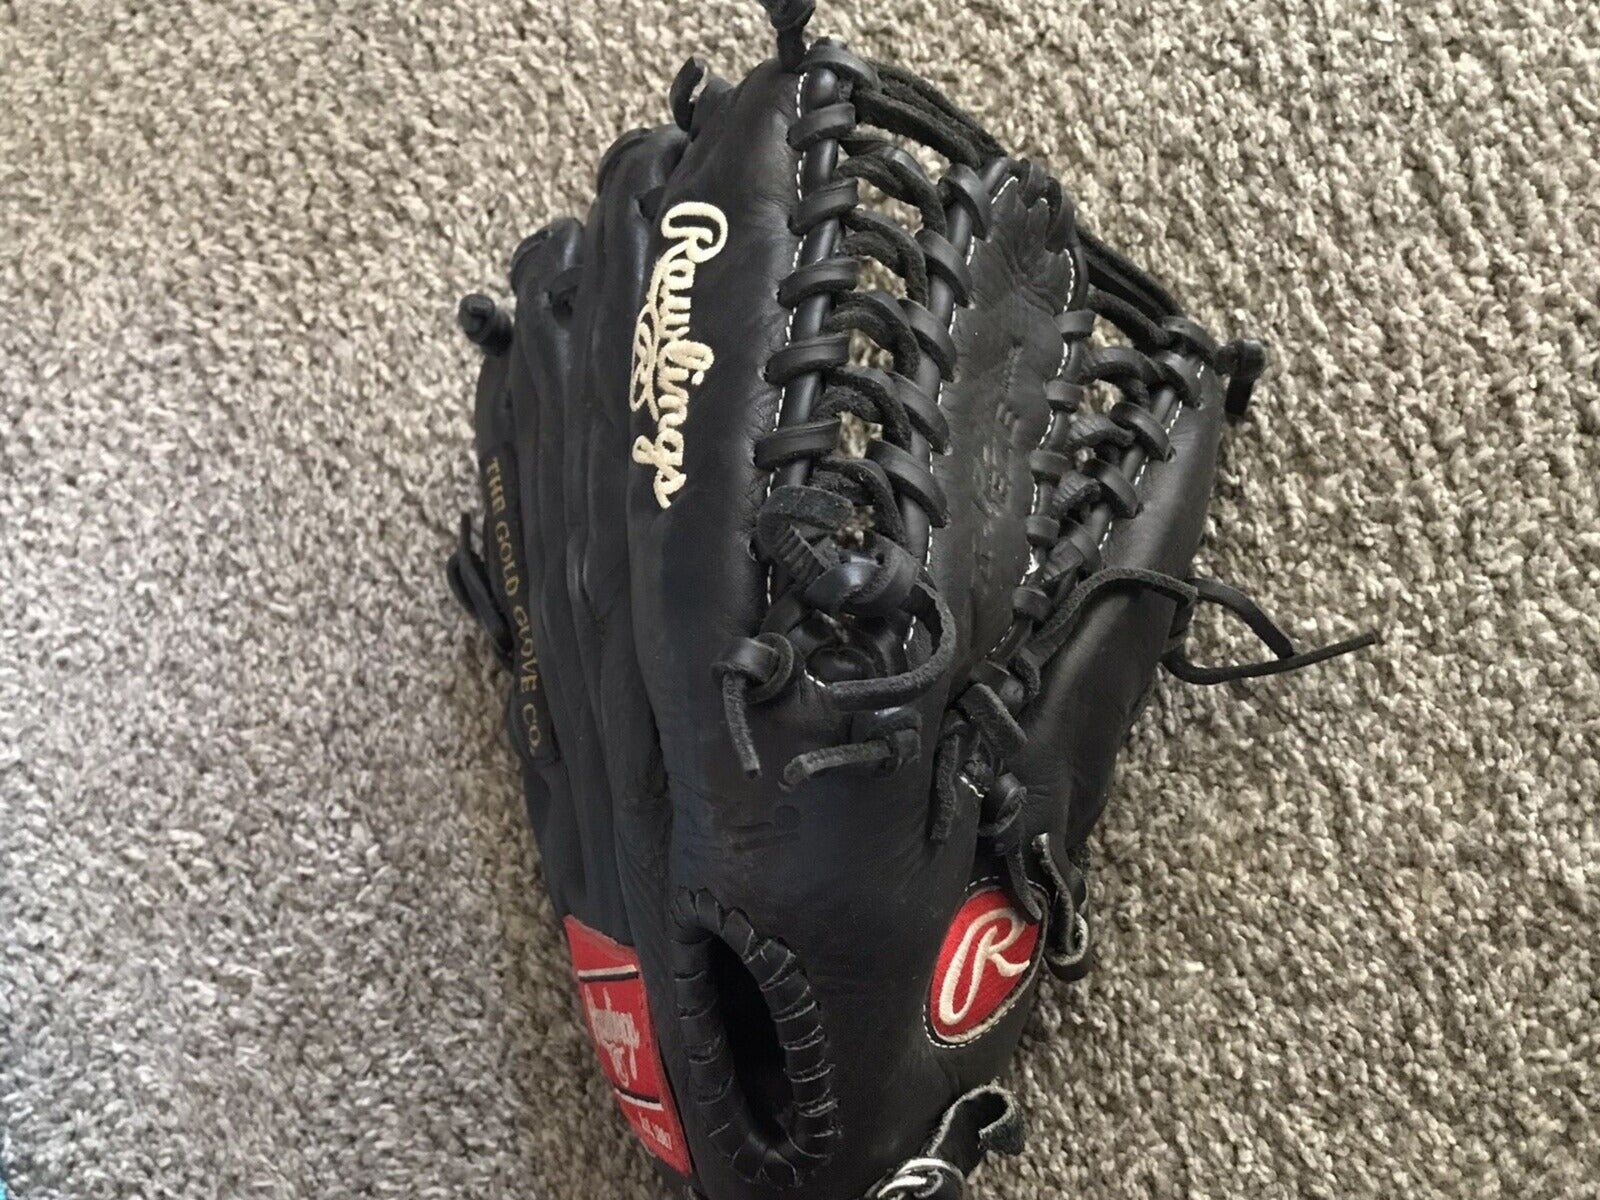 Rawlings 12 MLB Leather Baseball Glove - Black/Gray